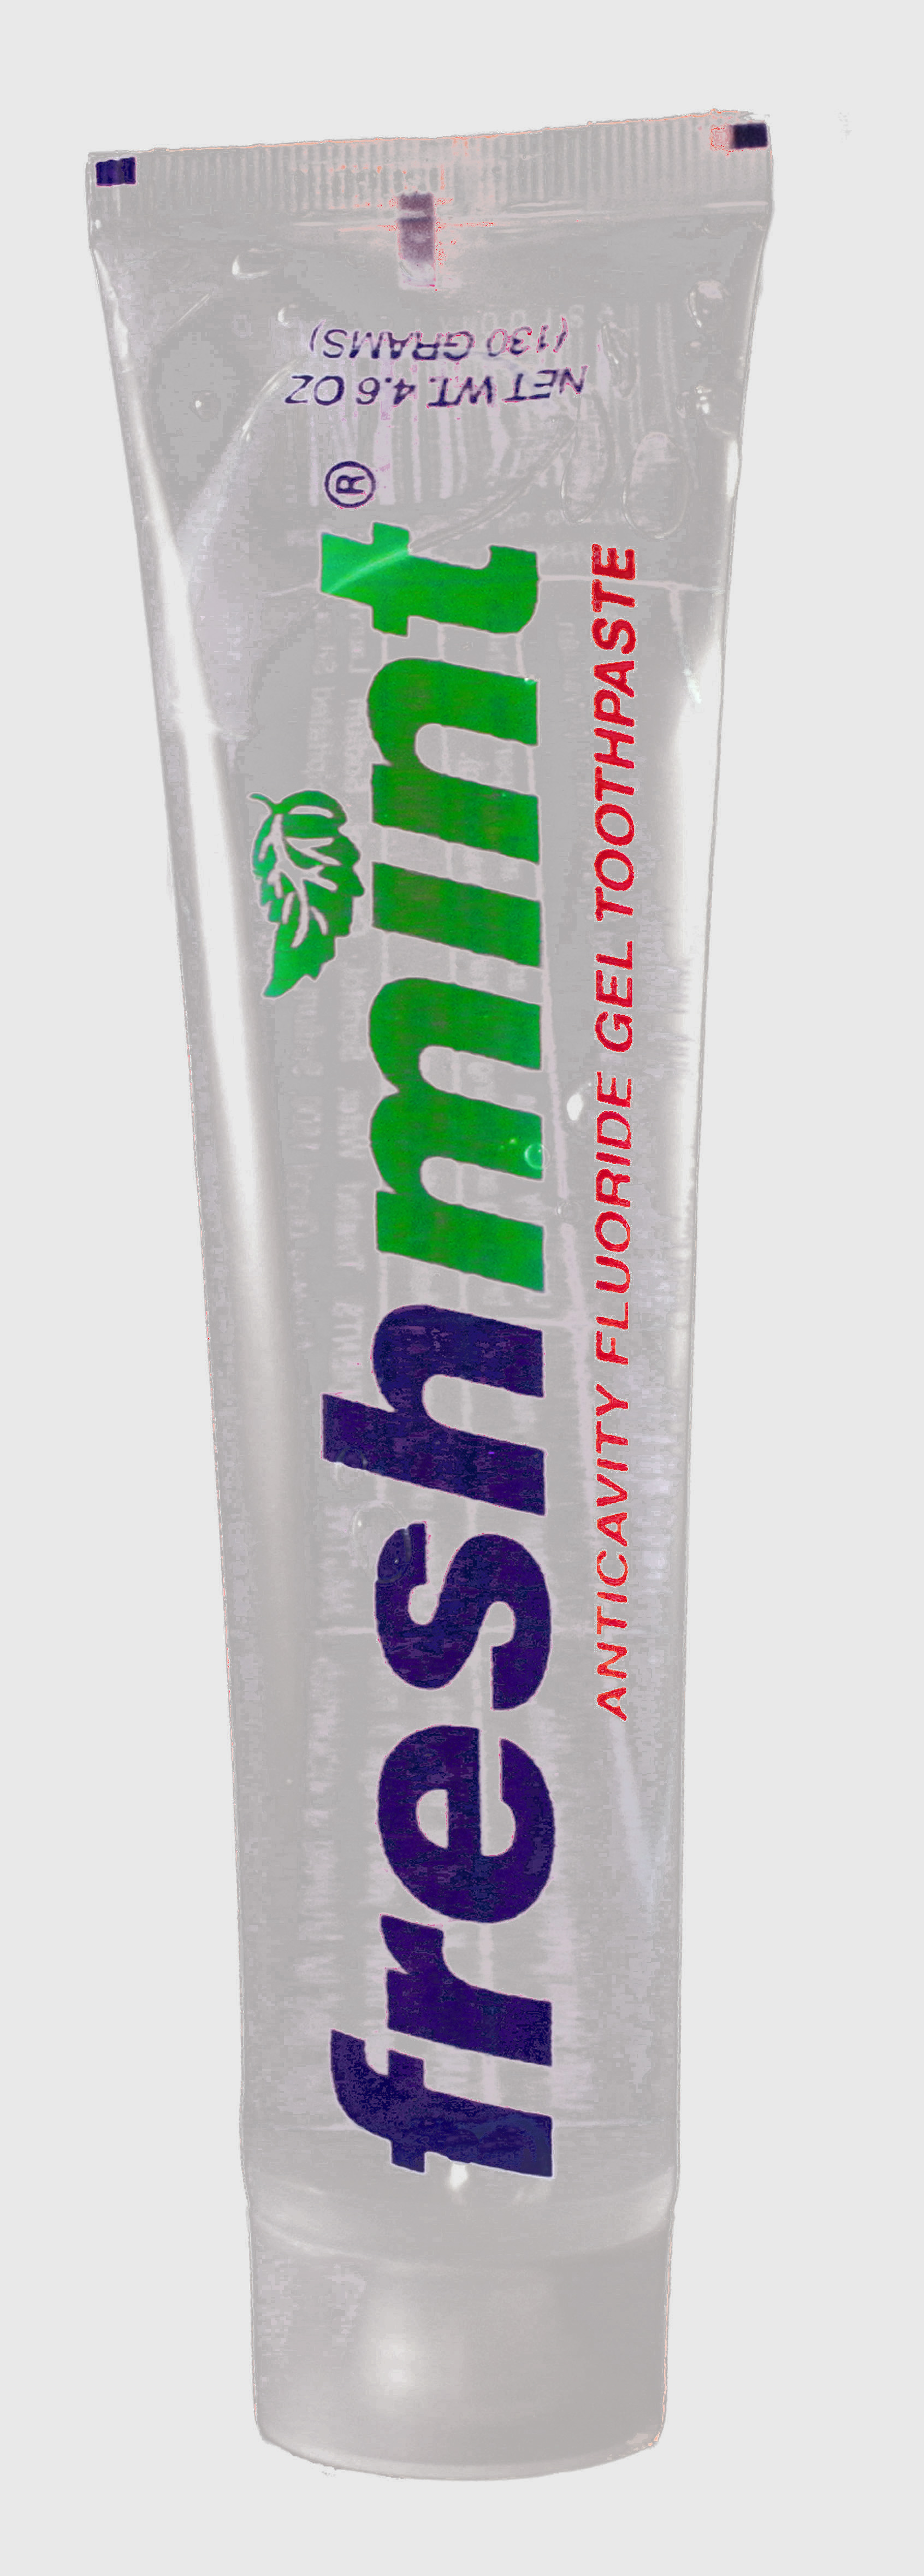 Freshmint 4.6 oz. Clear Gel Anticavity Fluoride Toothpaste